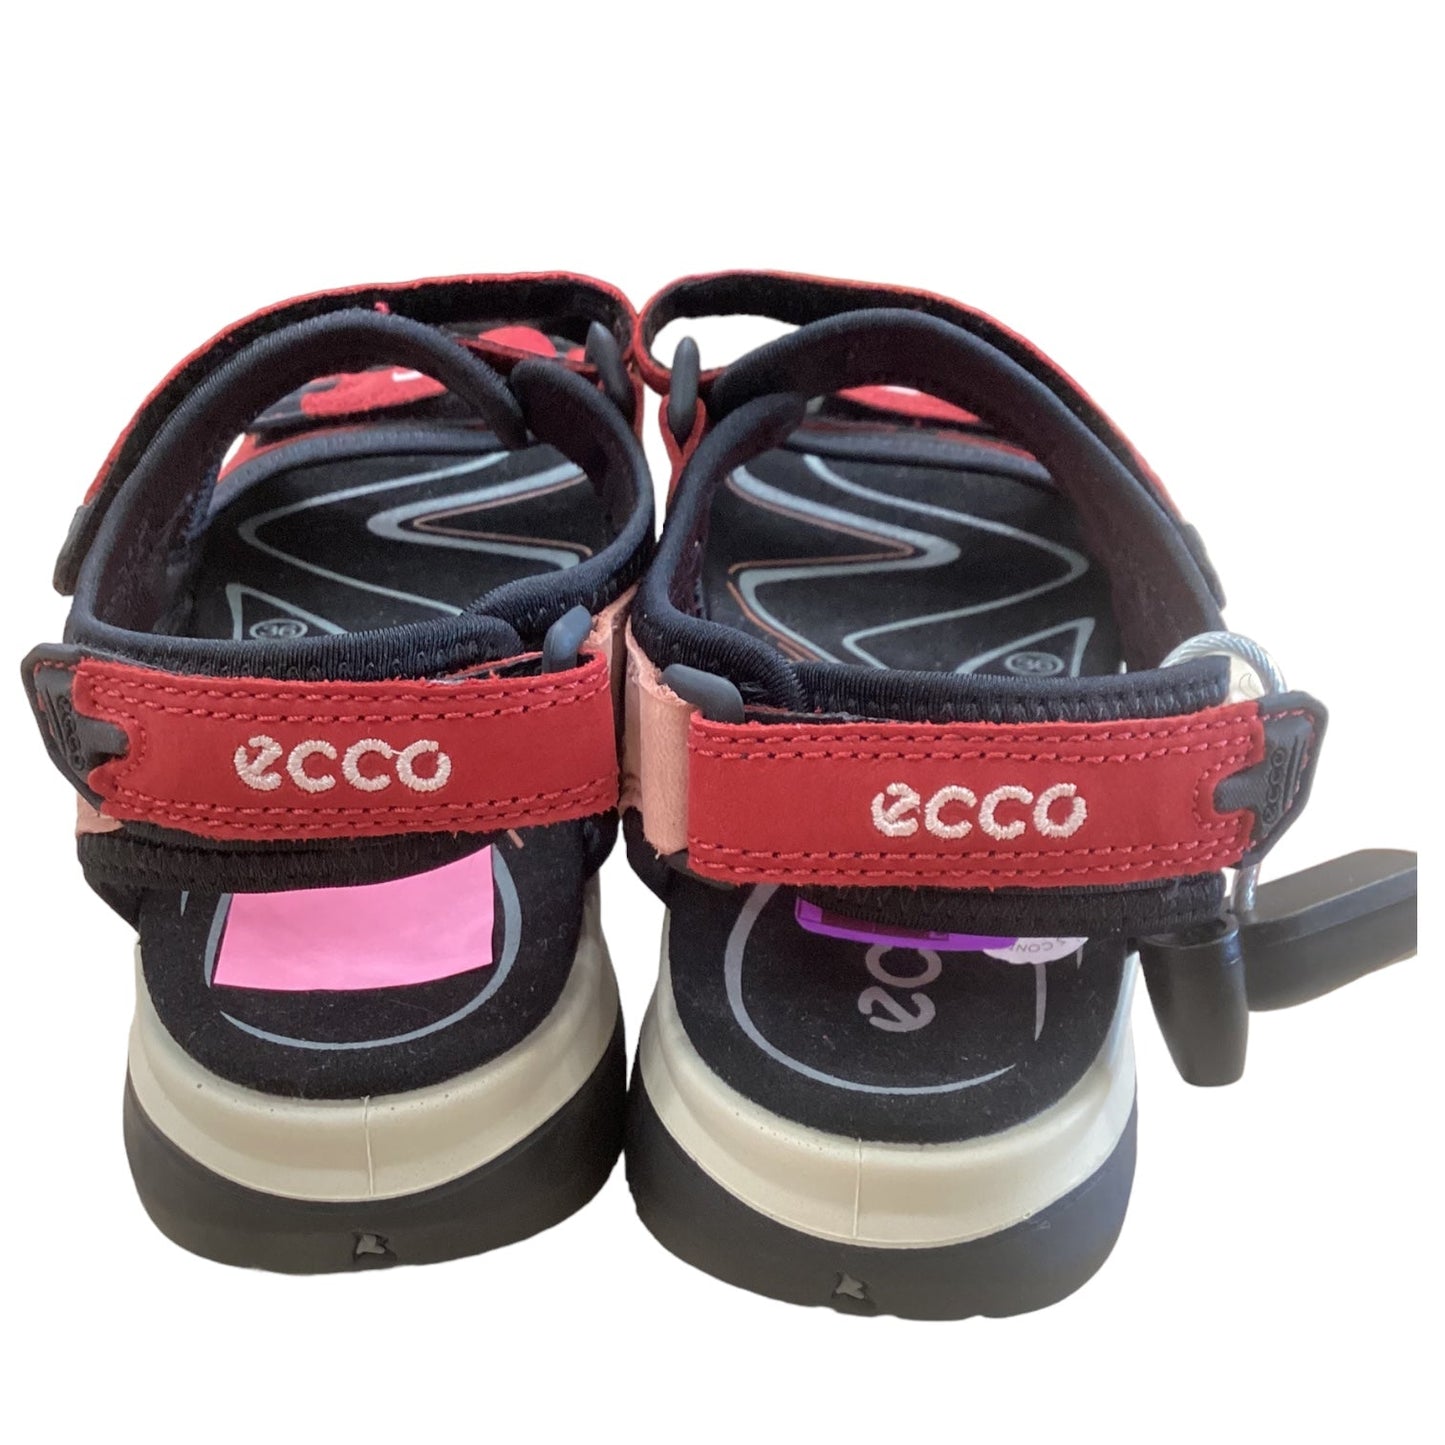 Black & Red Sandals Flats Ecco, Size 5.5